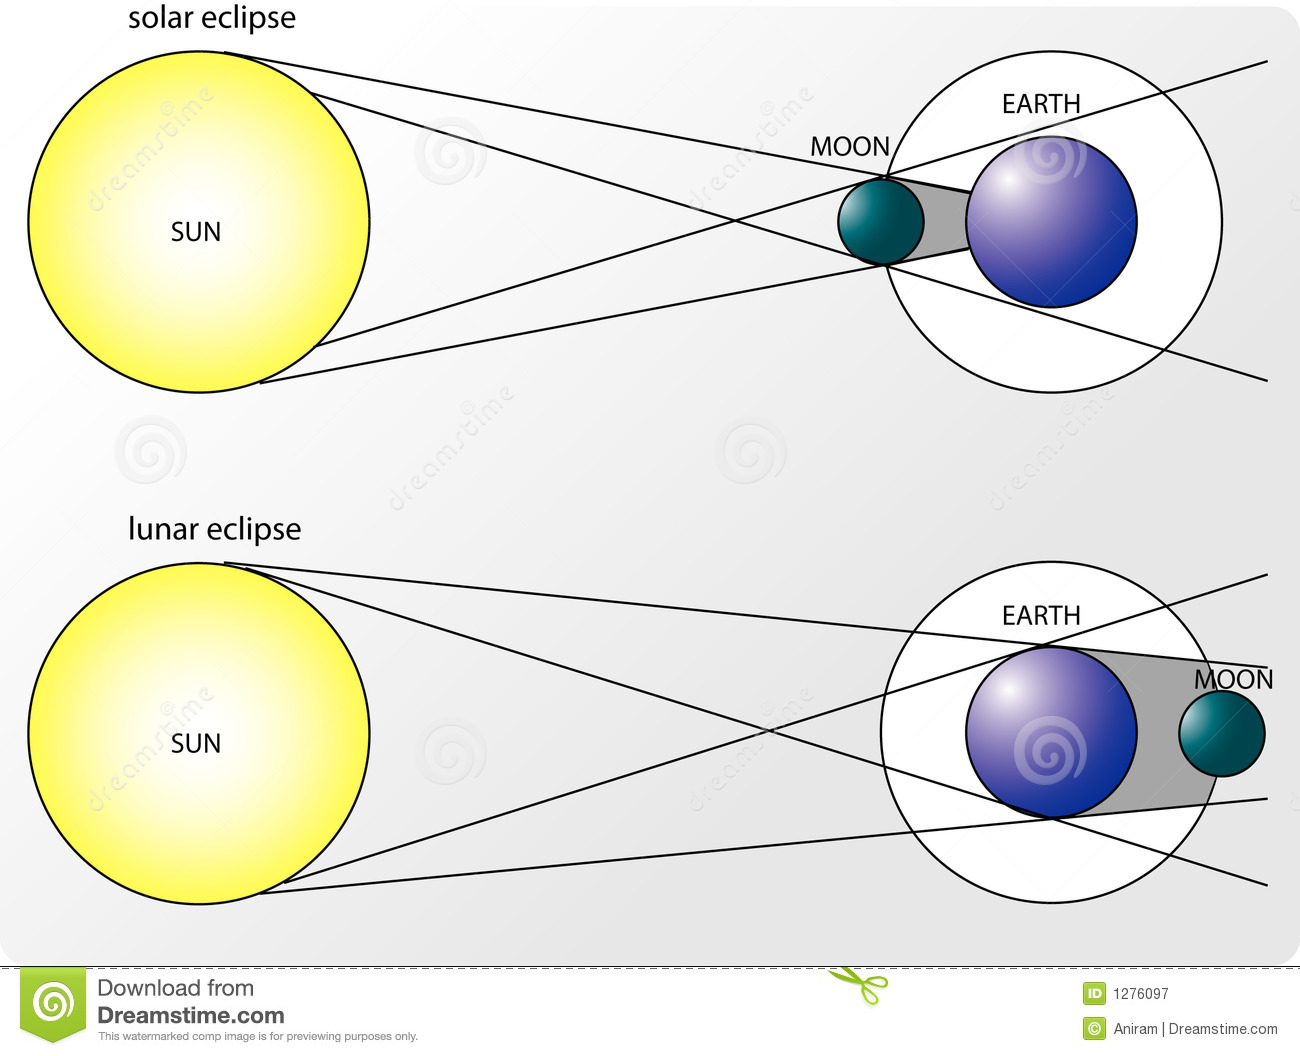 solar versus lunar eclipse